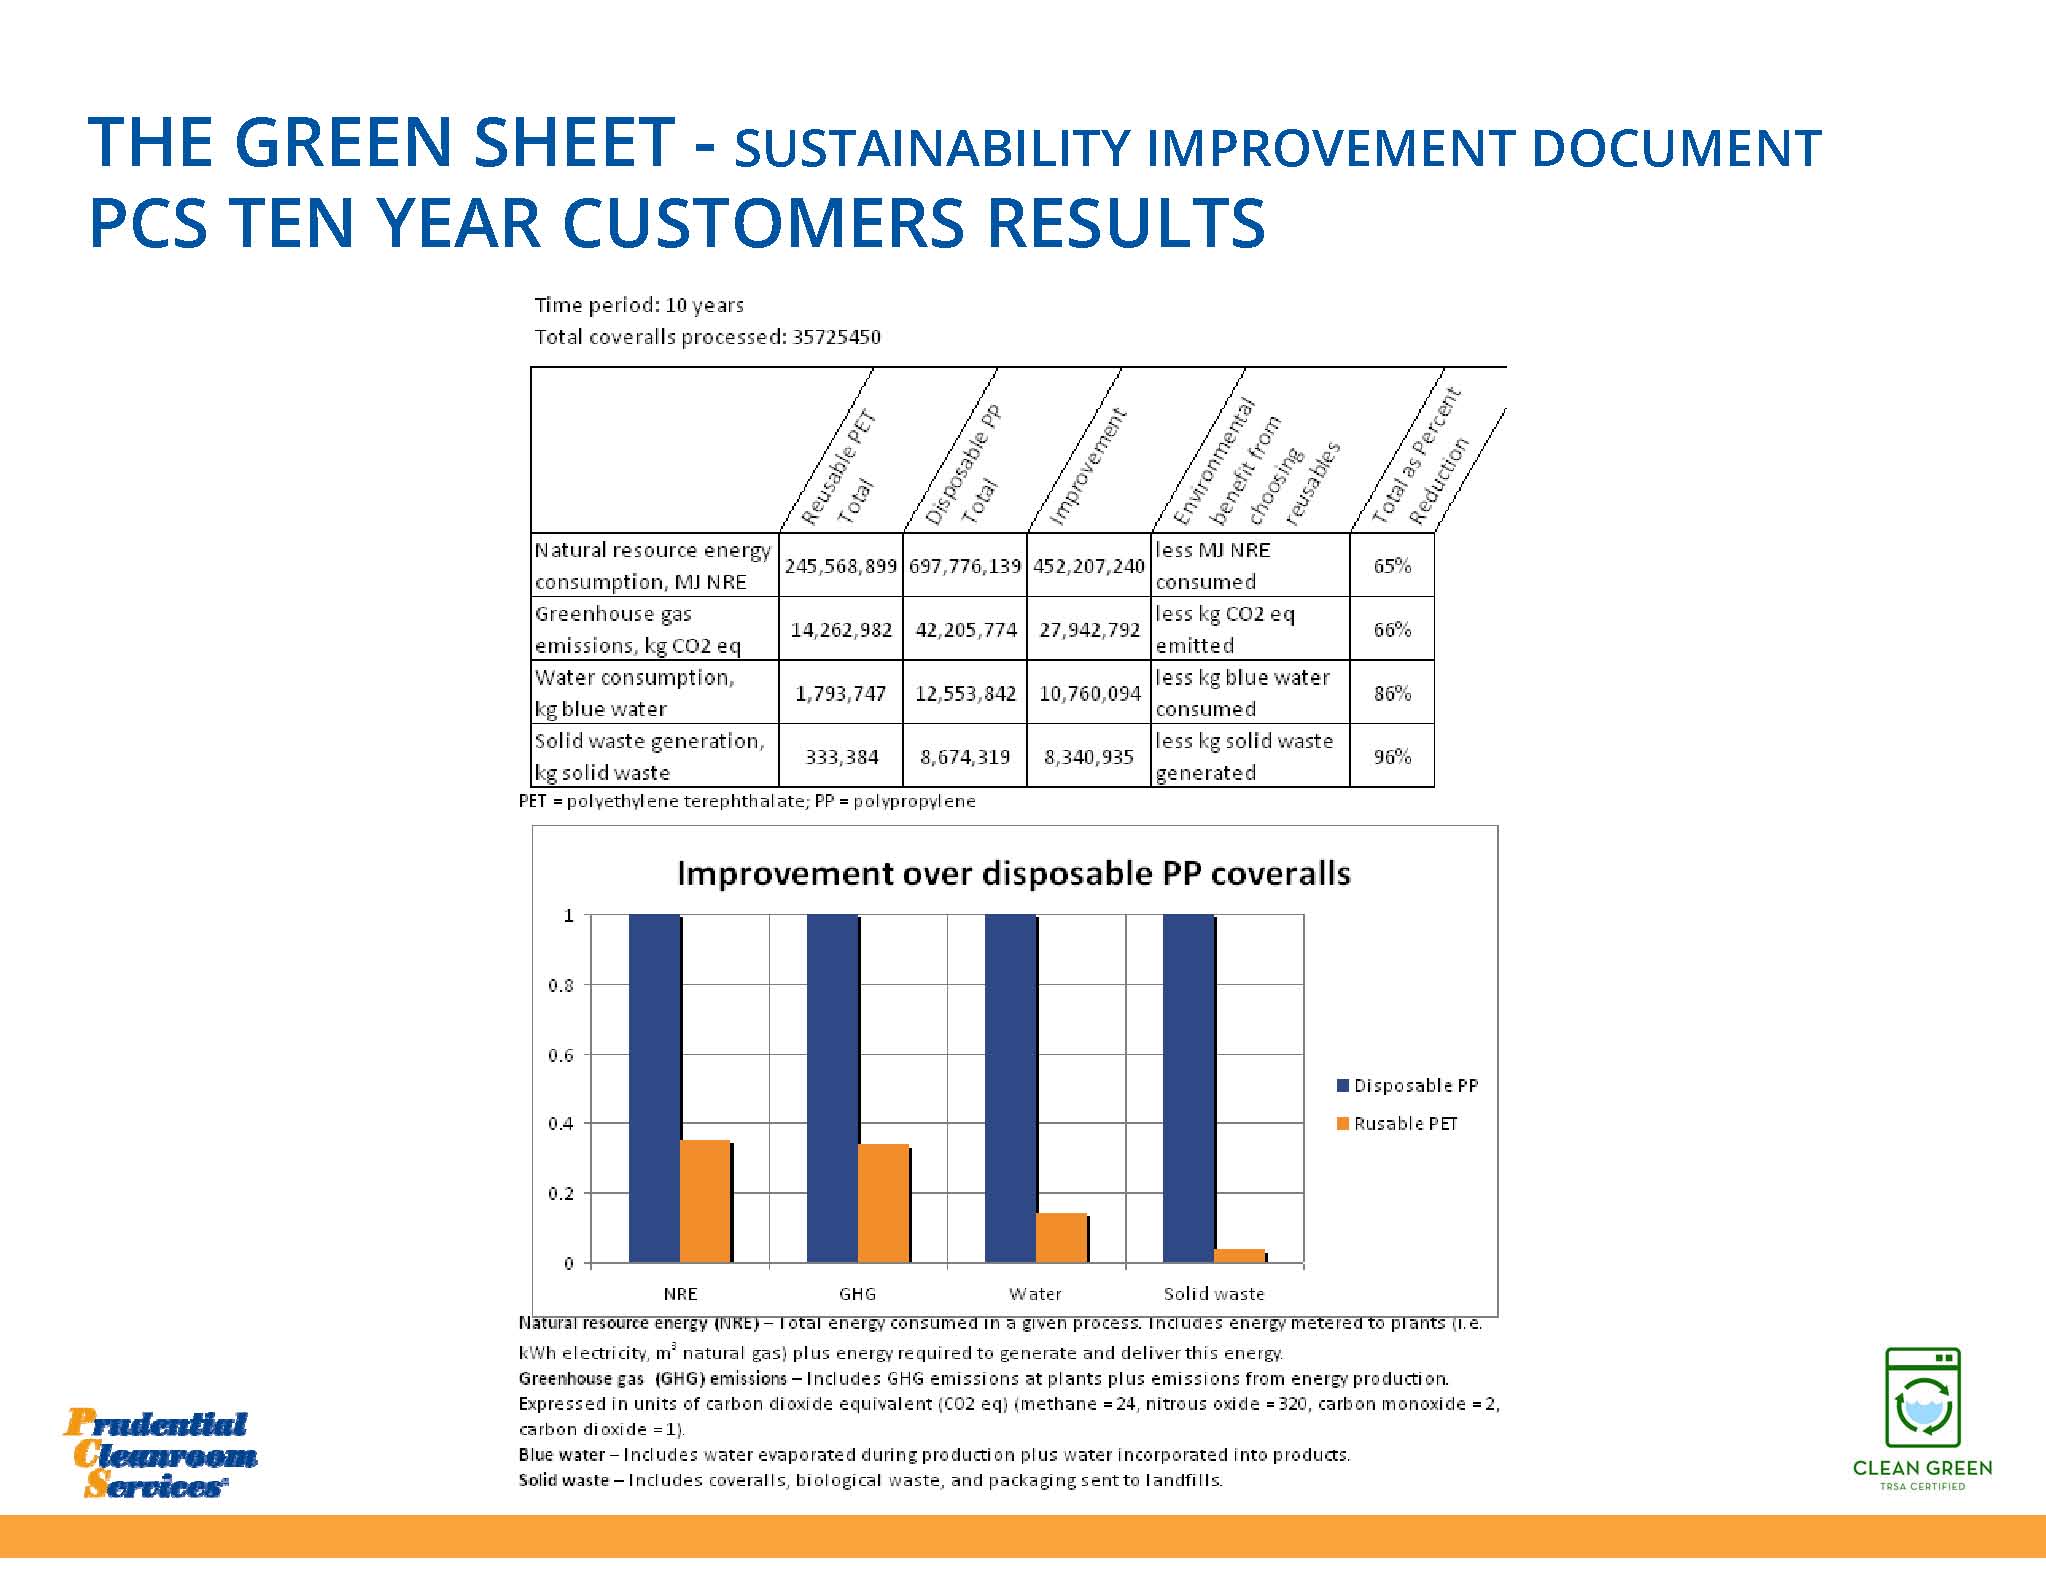 The Green Sheet - Sustainability Improvement Document